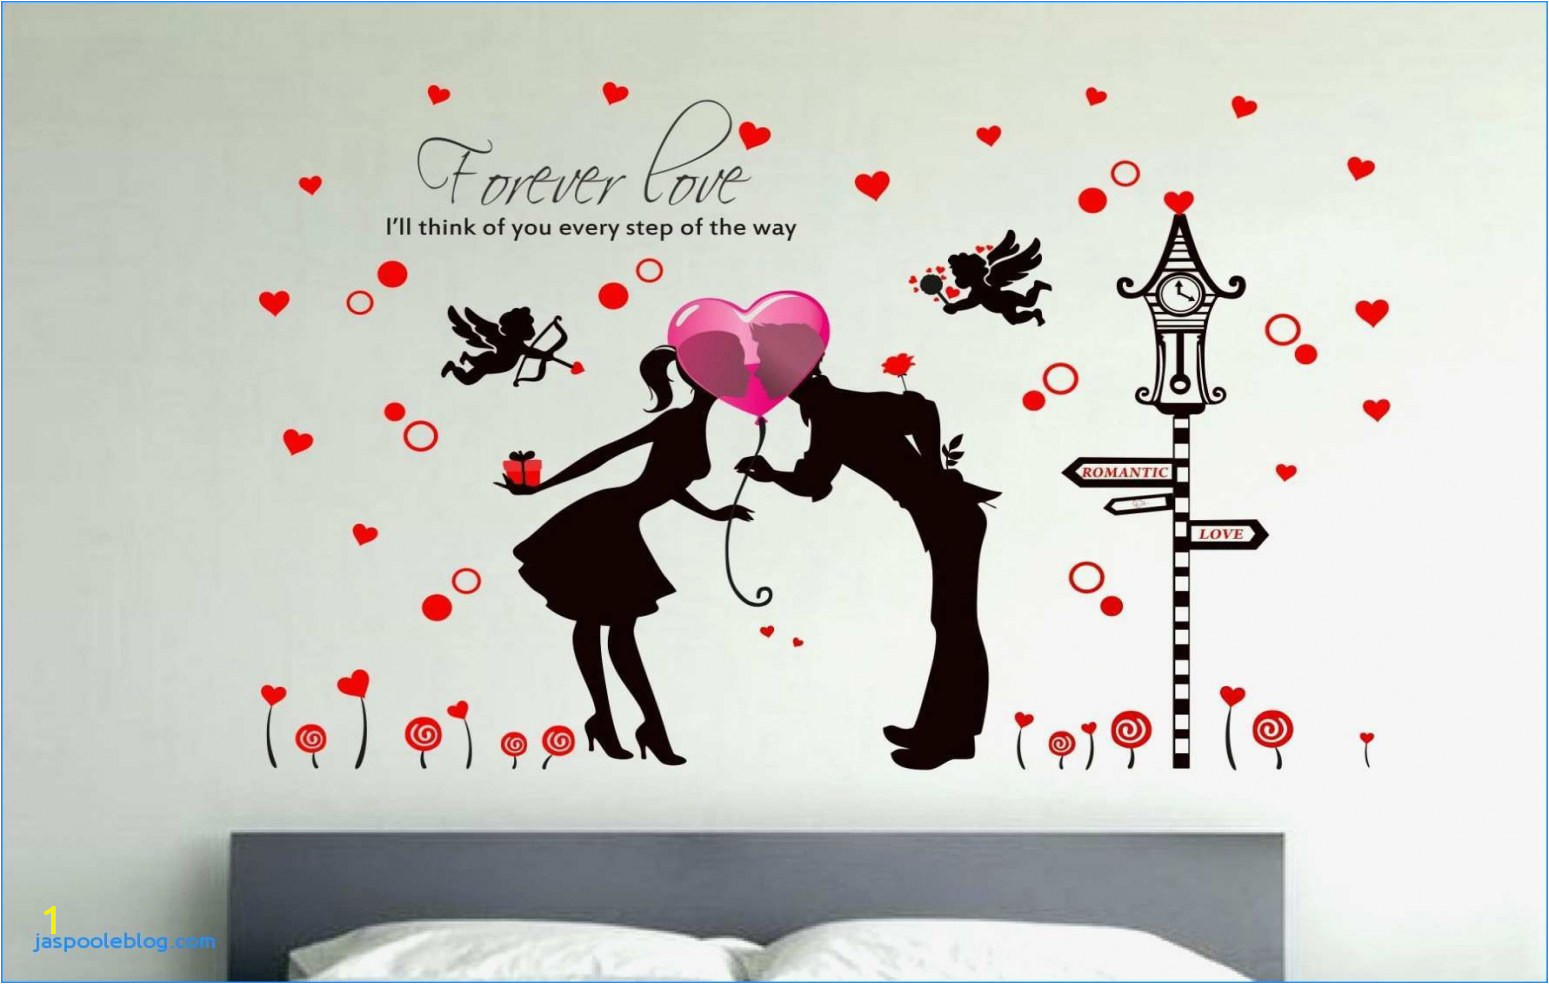 Romantic Bedroom Wall Murals Bedroom Wall Ideas 56 Wall Stickers Ikea Jaspooleblog Home